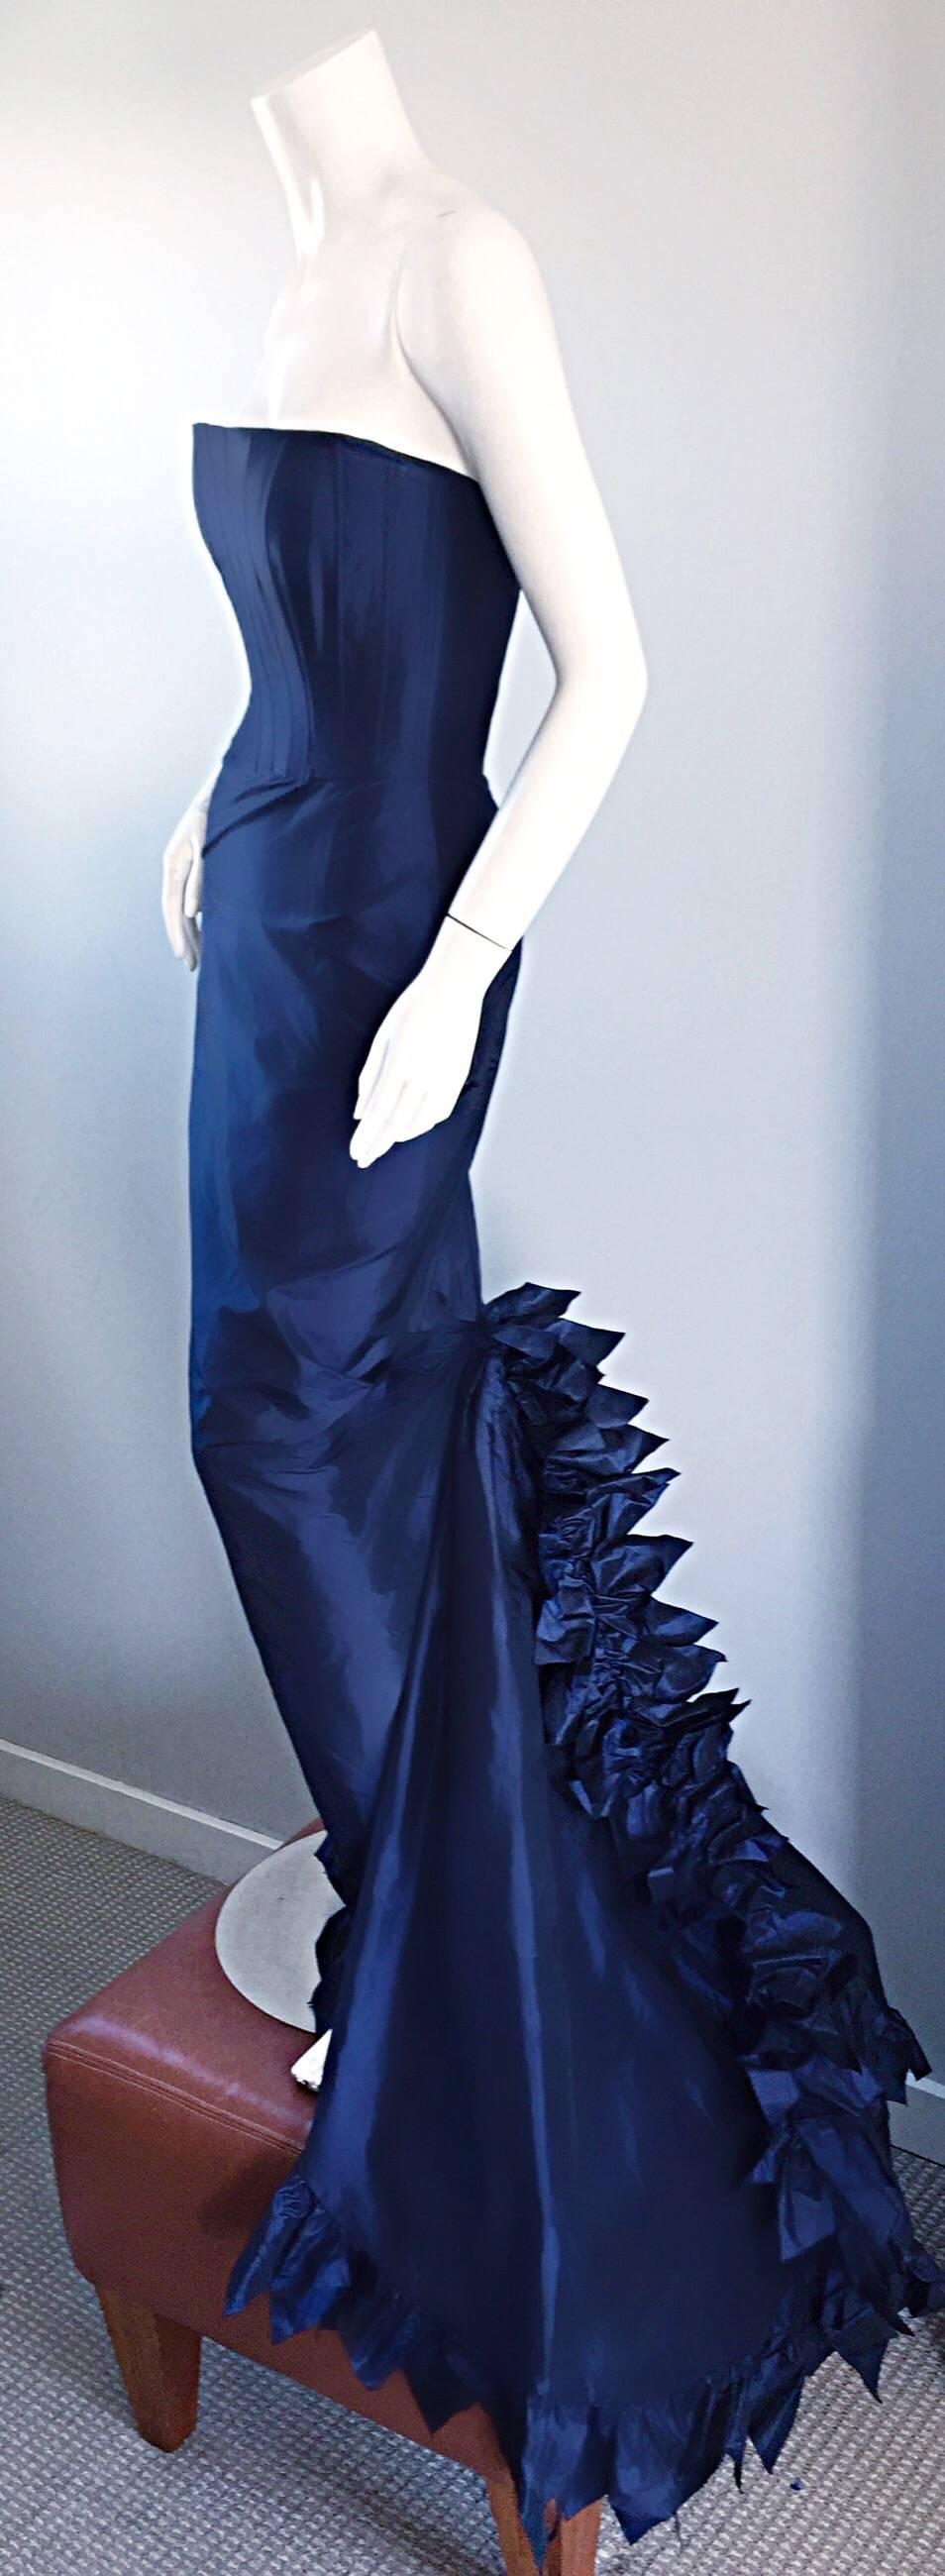 Exquisite Vintage Oscar de la Renta Navy Blue Silk Taffeta Dramatic Size 6 Gown 2